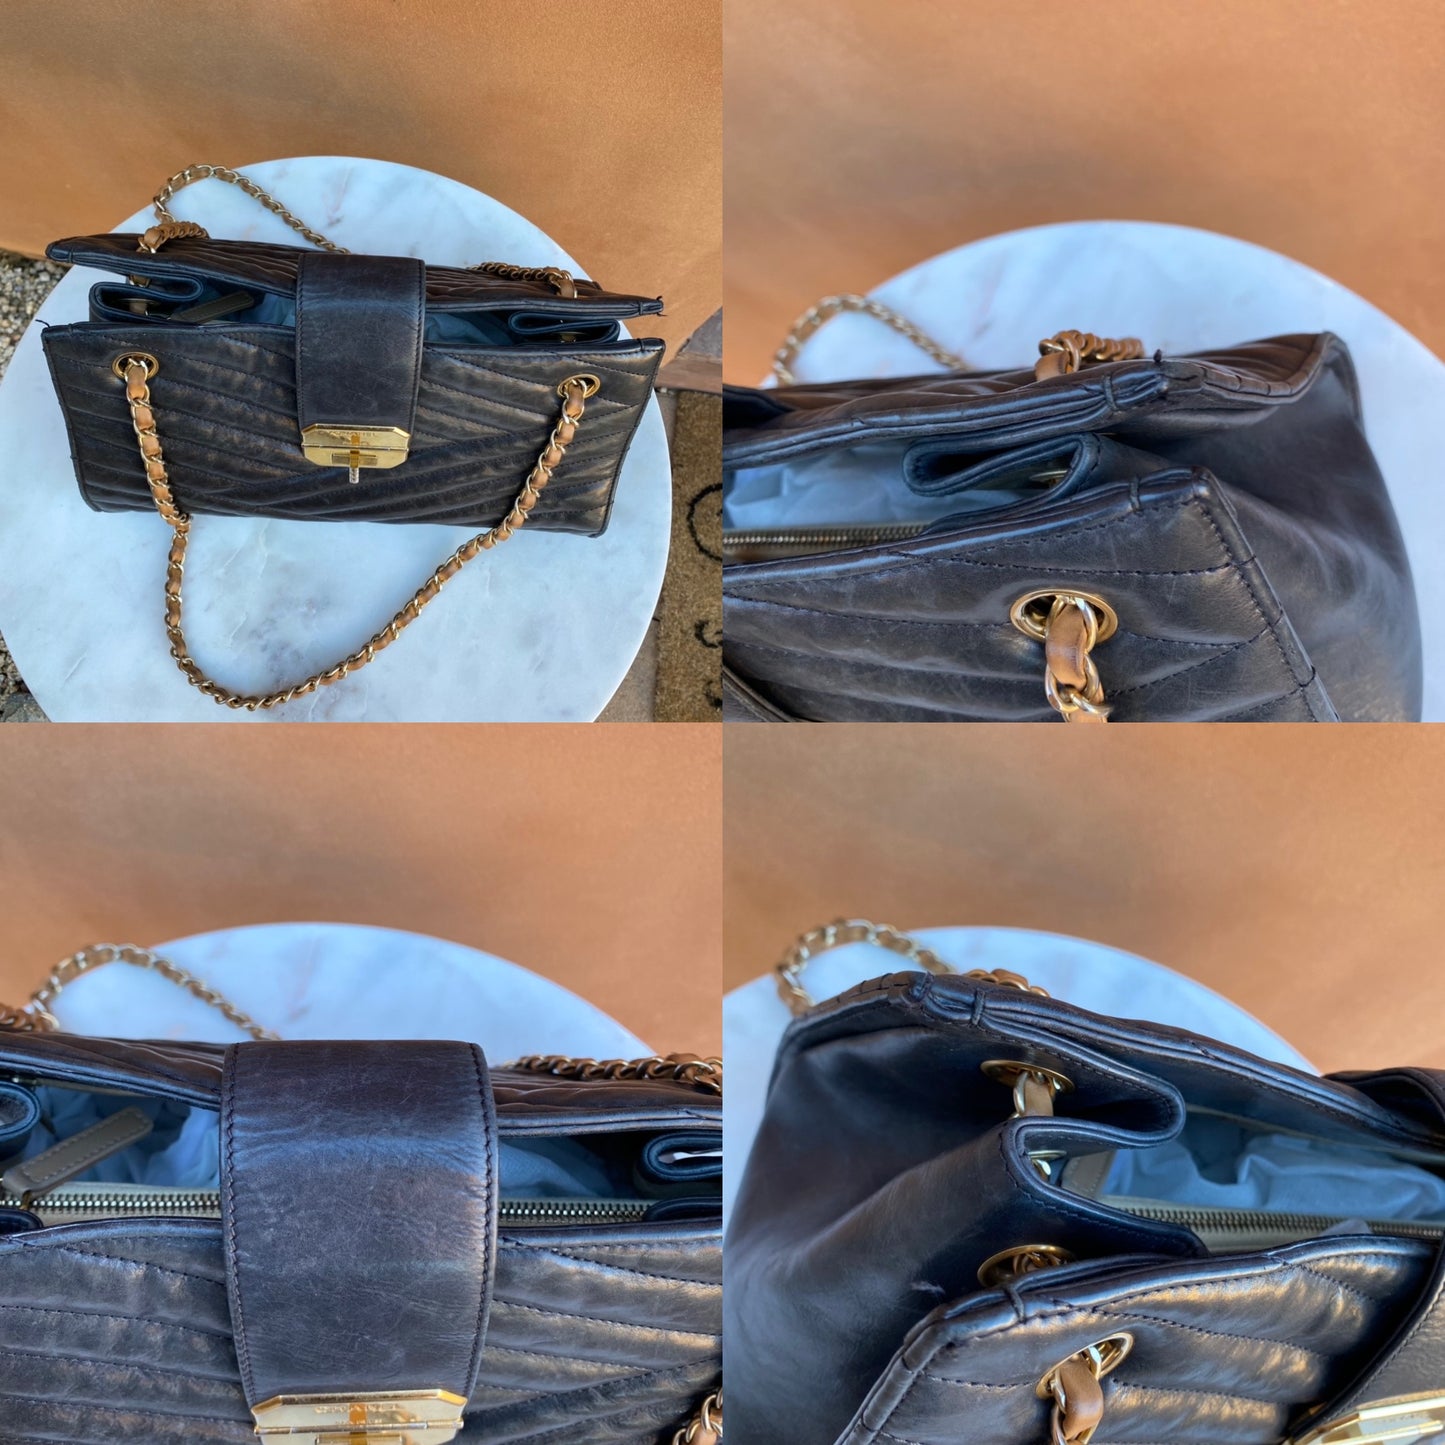 Chanel Vintage Chevron Leather Gabrielle Shoulder Bag